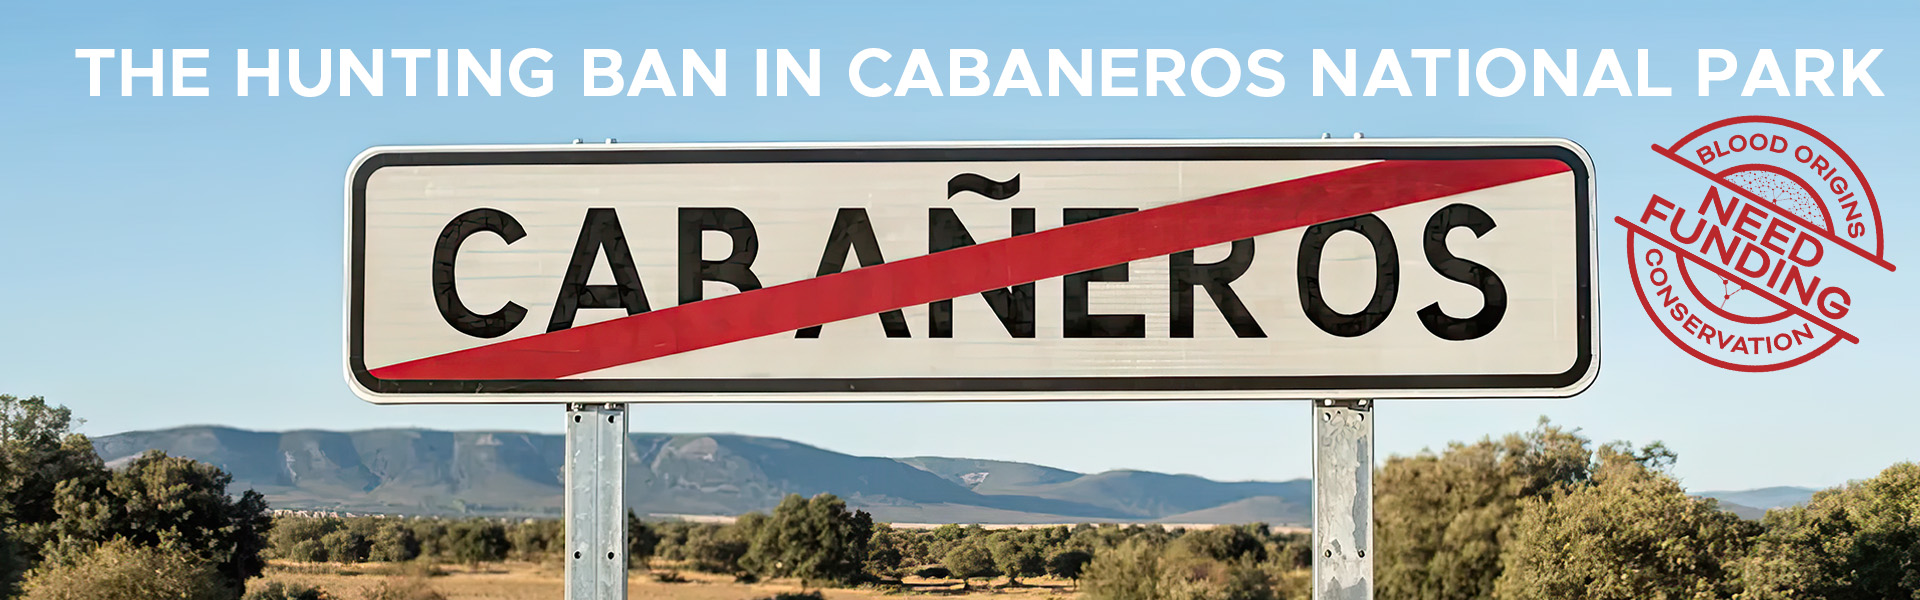 blood origins cabaneros hunting ban documentary spain banner